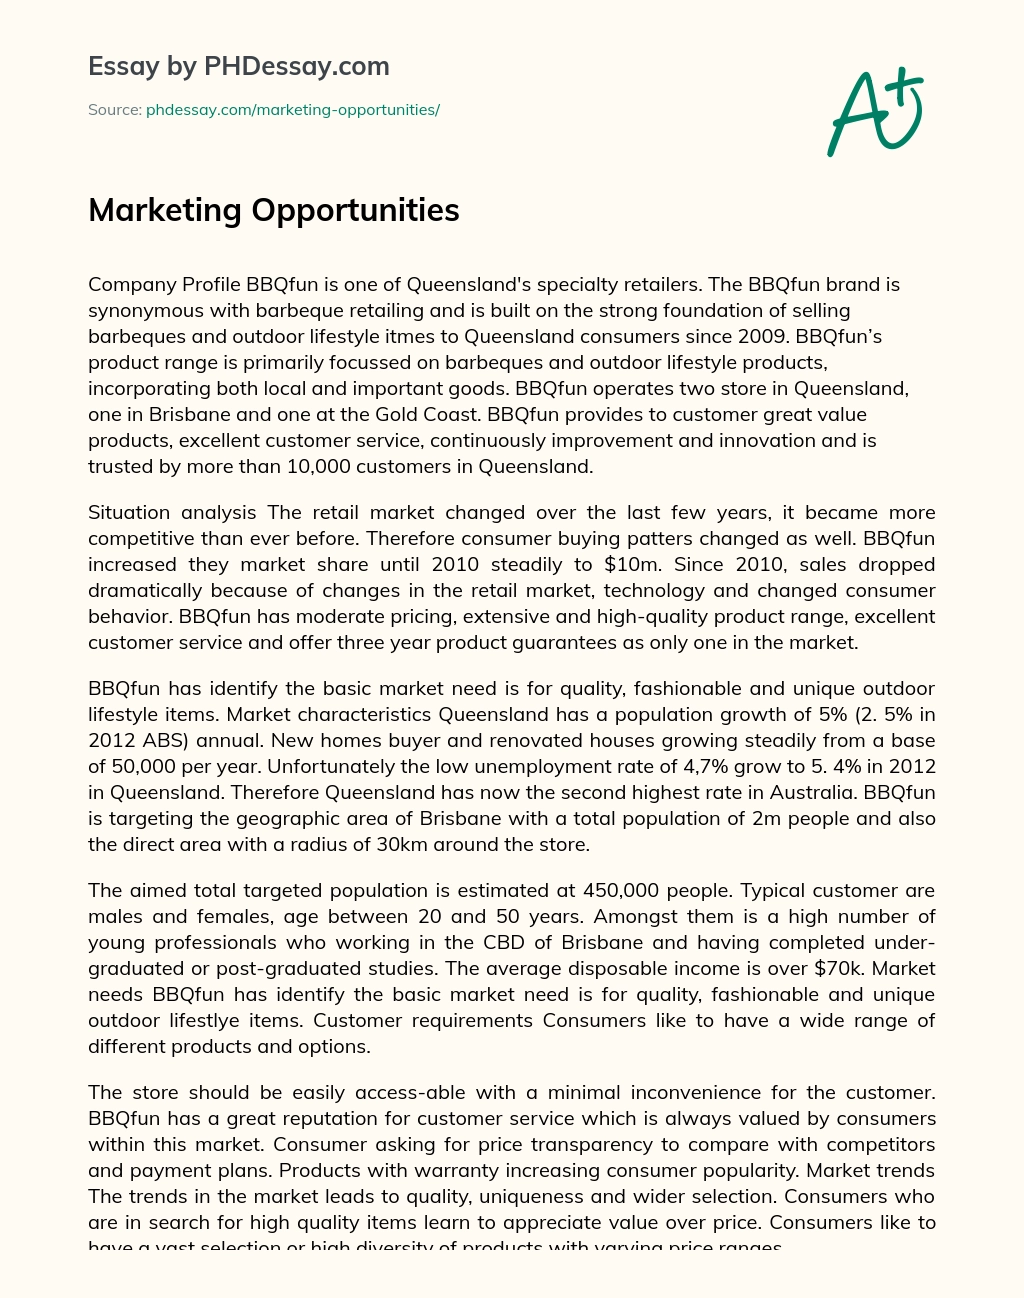 Marketing Opportunities essay